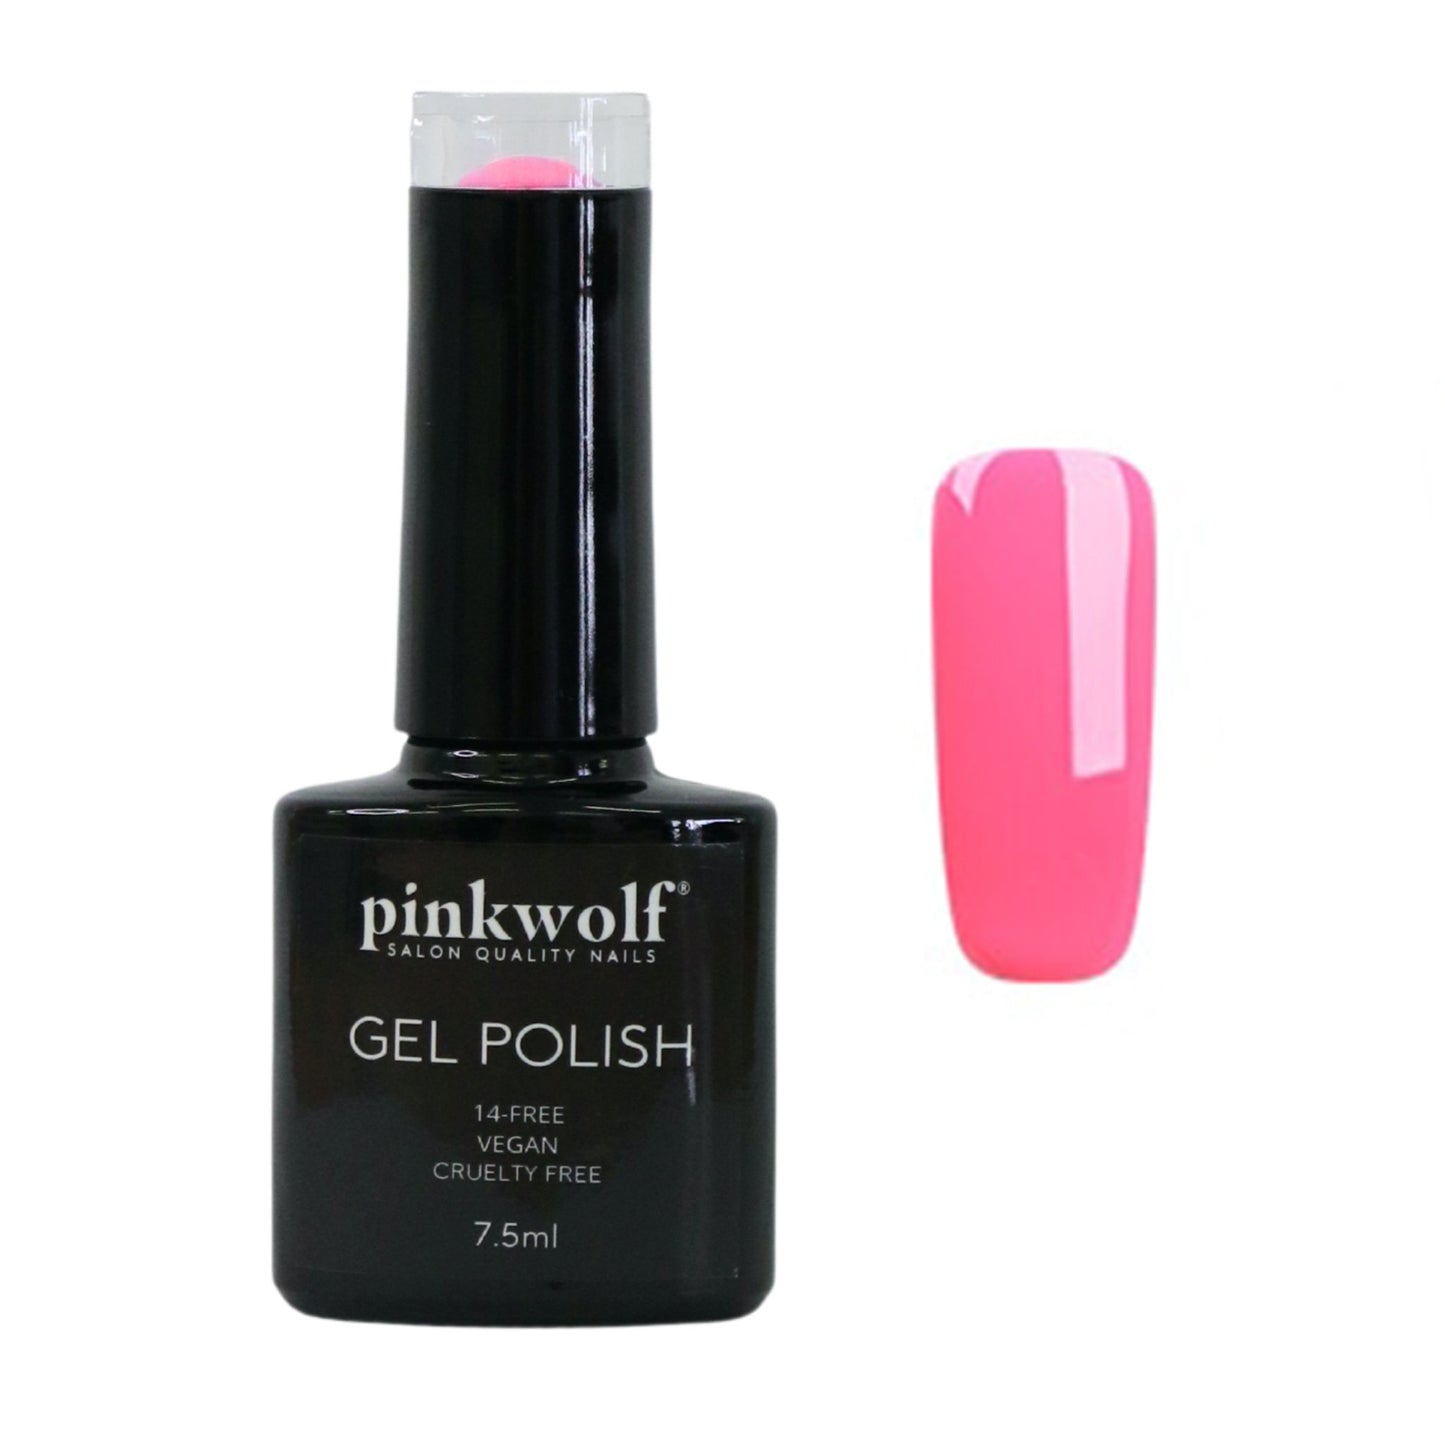 Pinkwolf gel nail polish pink 7.5ml bottle